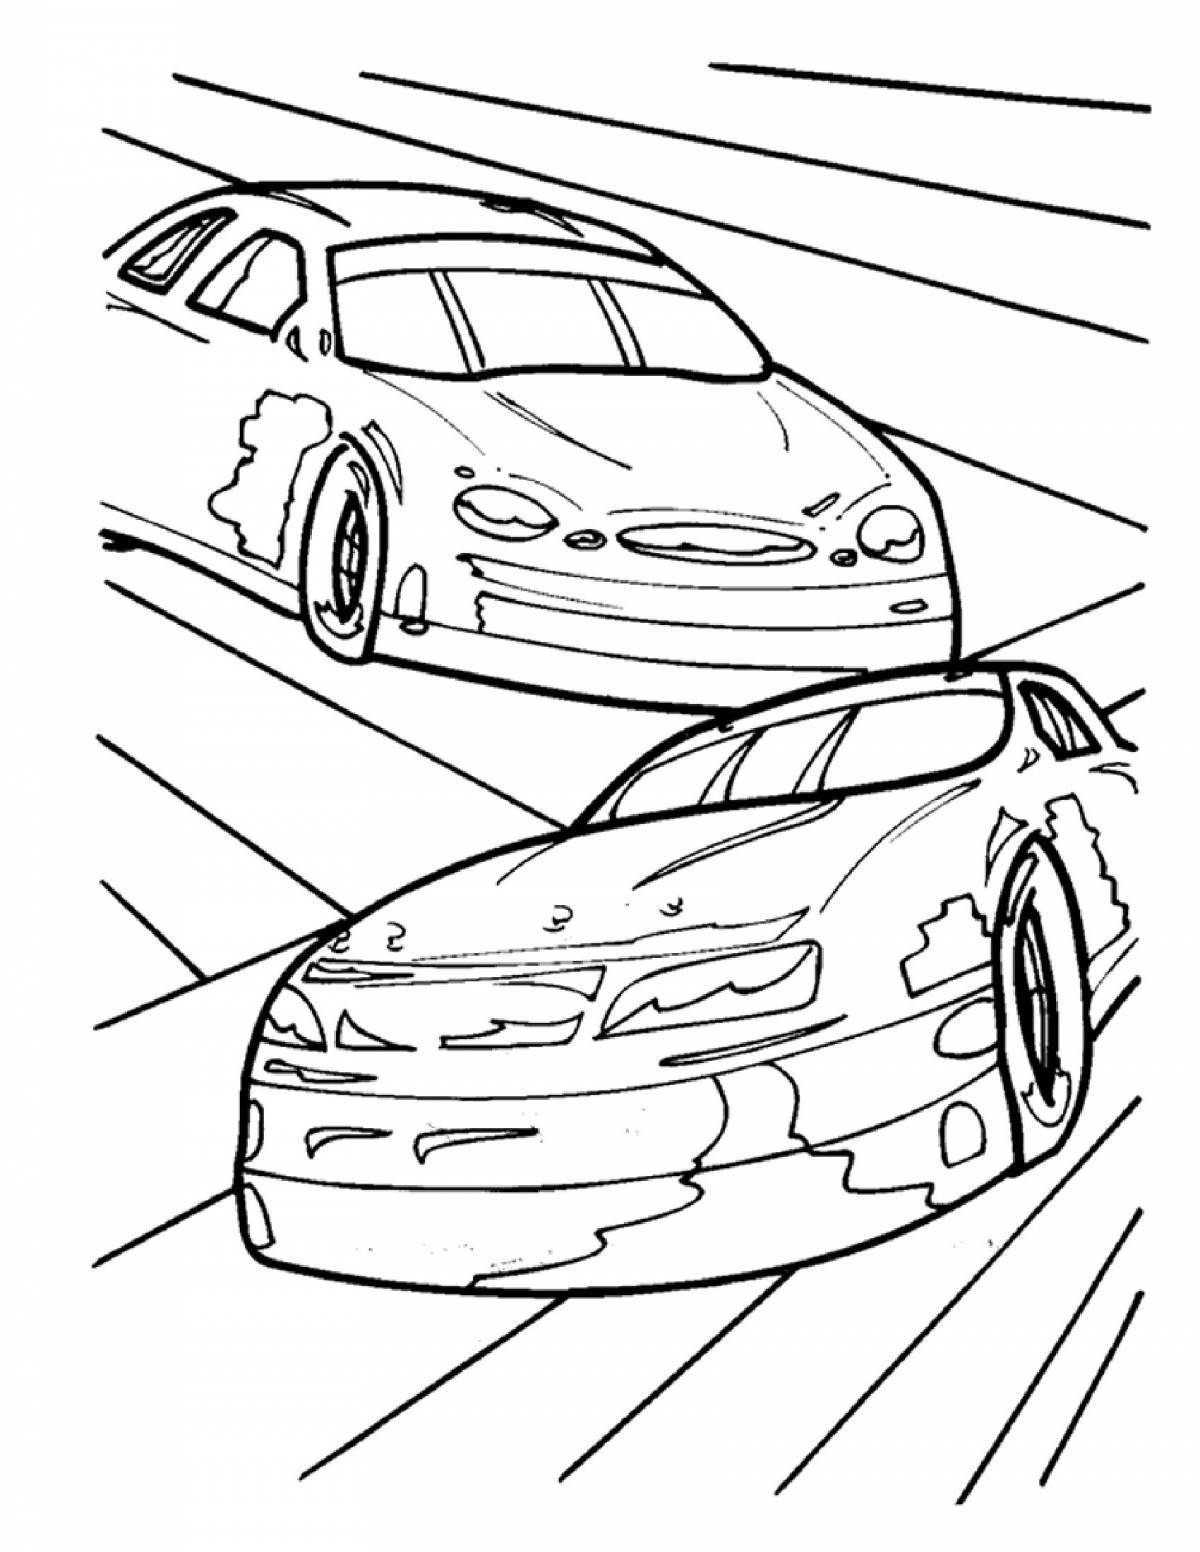 Splendid racing 2 coloring page